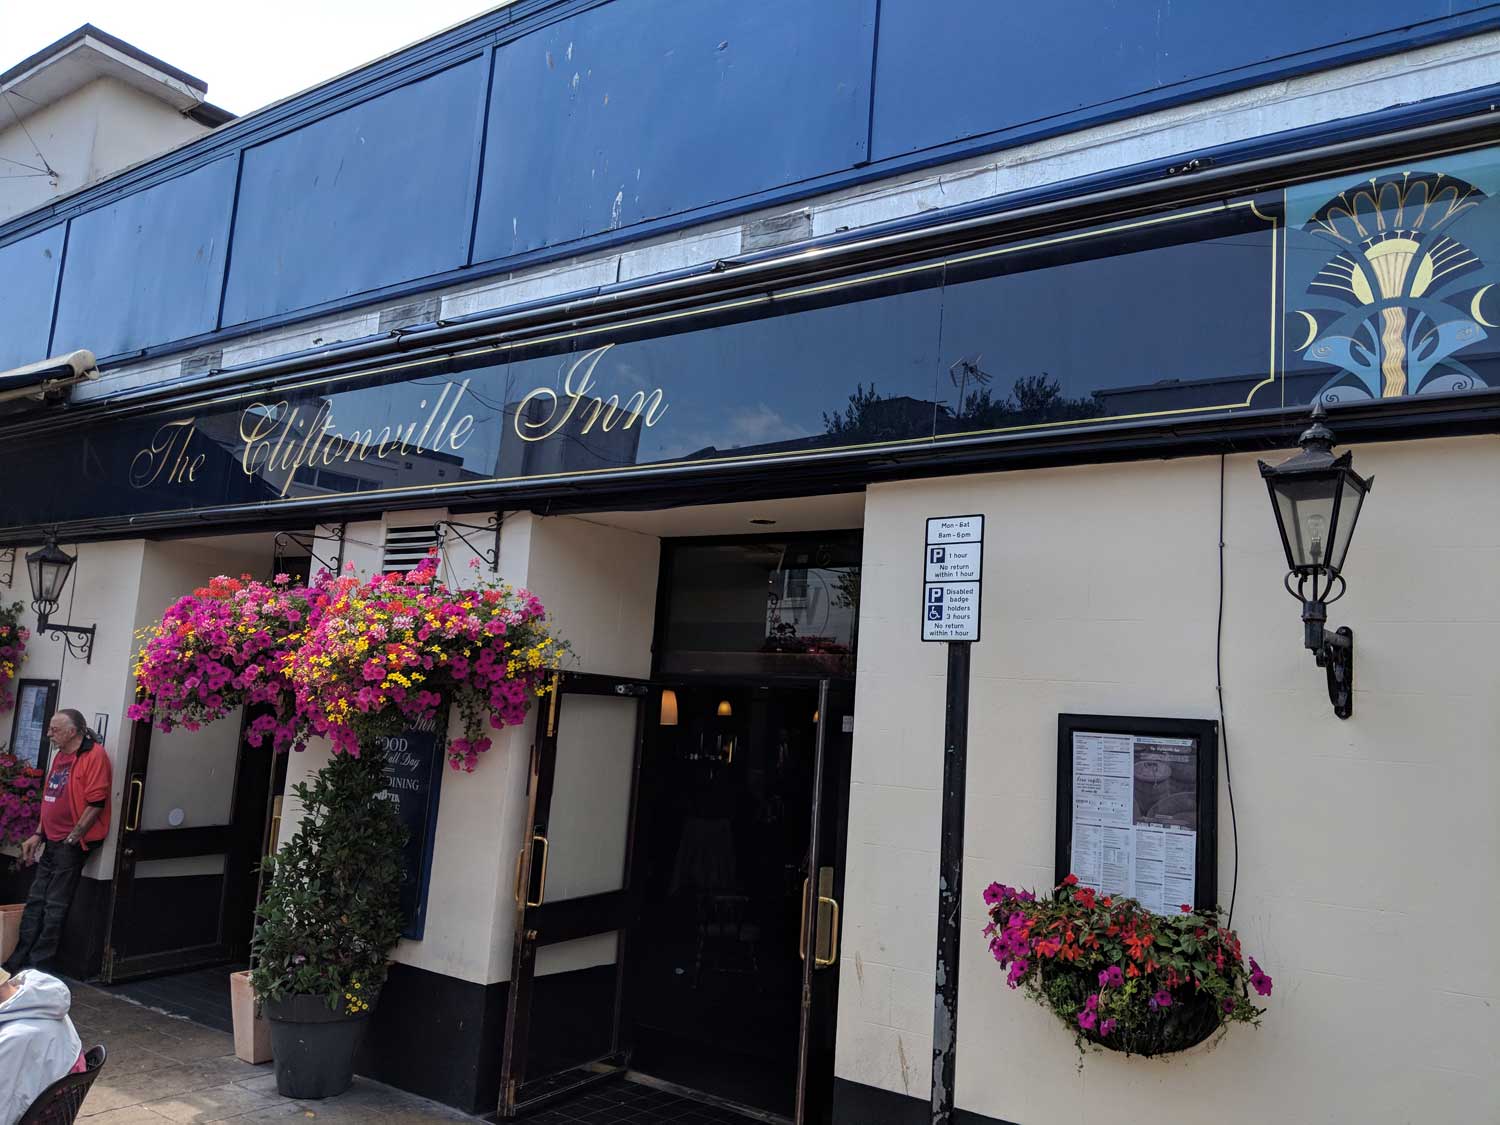 The Cliftonville Inn, Brighton & Hove